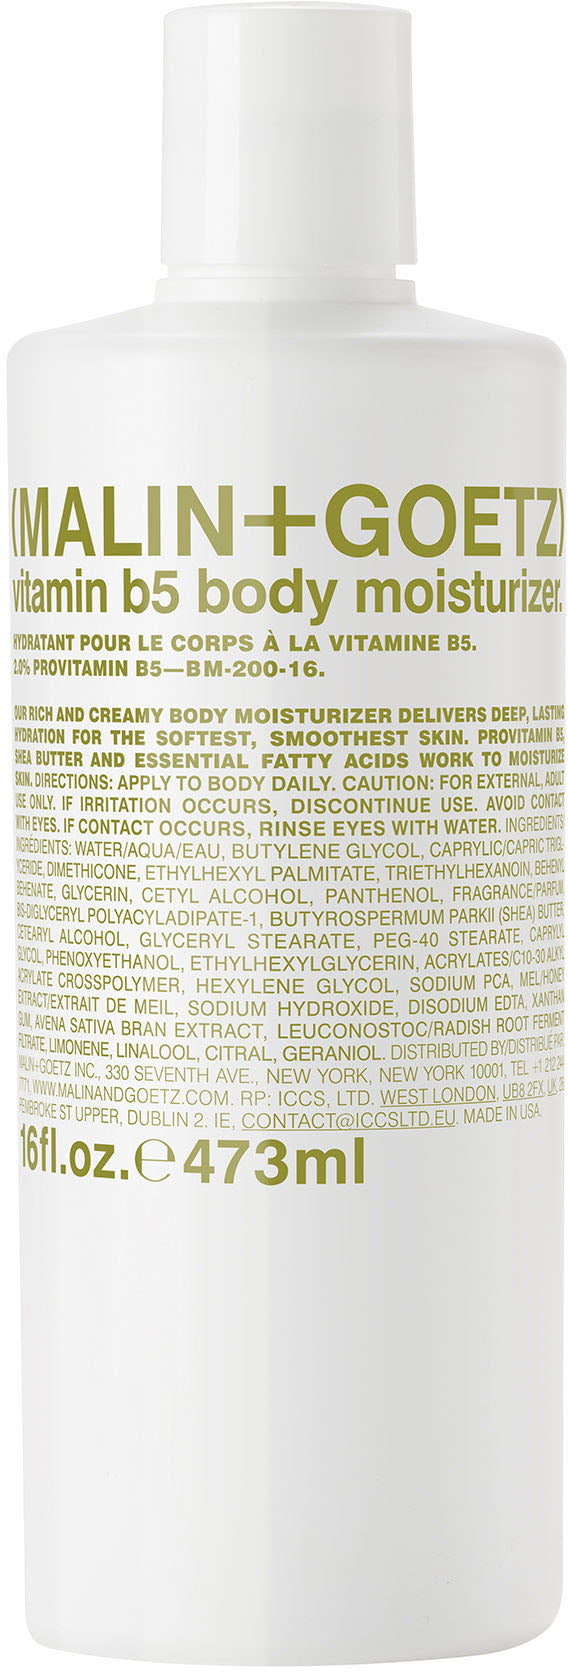 vitamin b5 body moisturizer